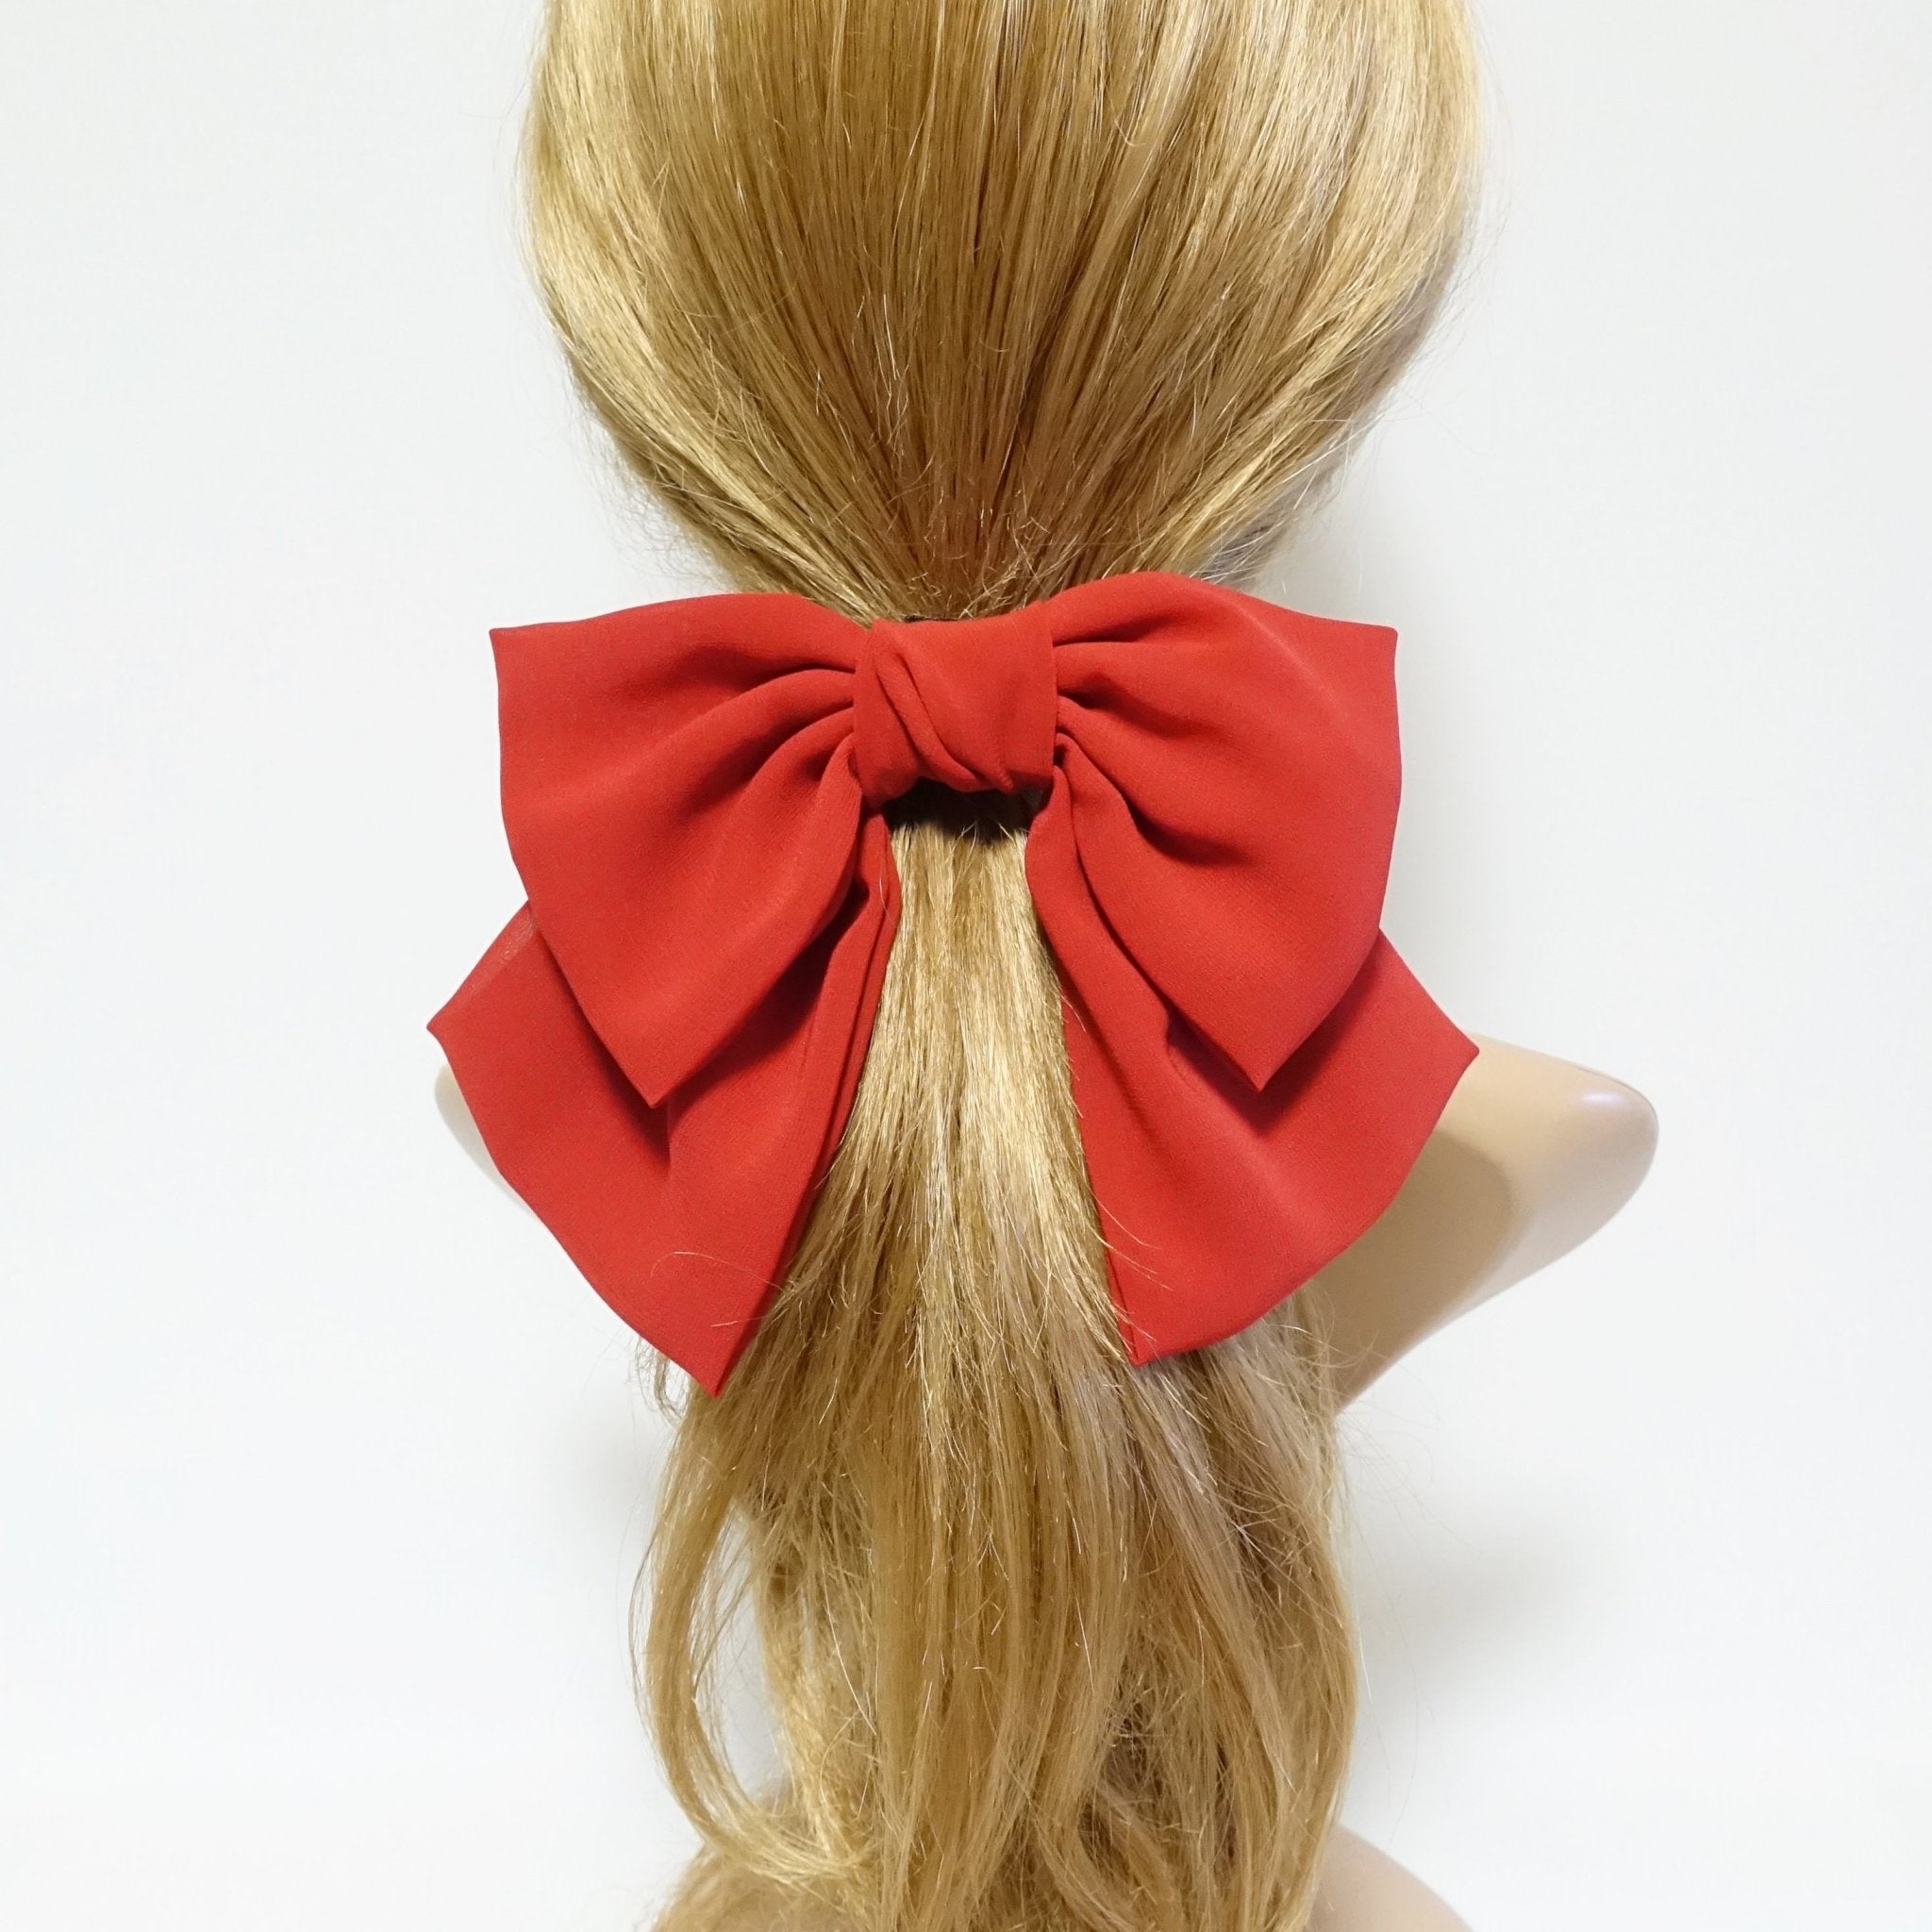 Bow Hair Accessories Red, Elastic Hair Big Bow Tie